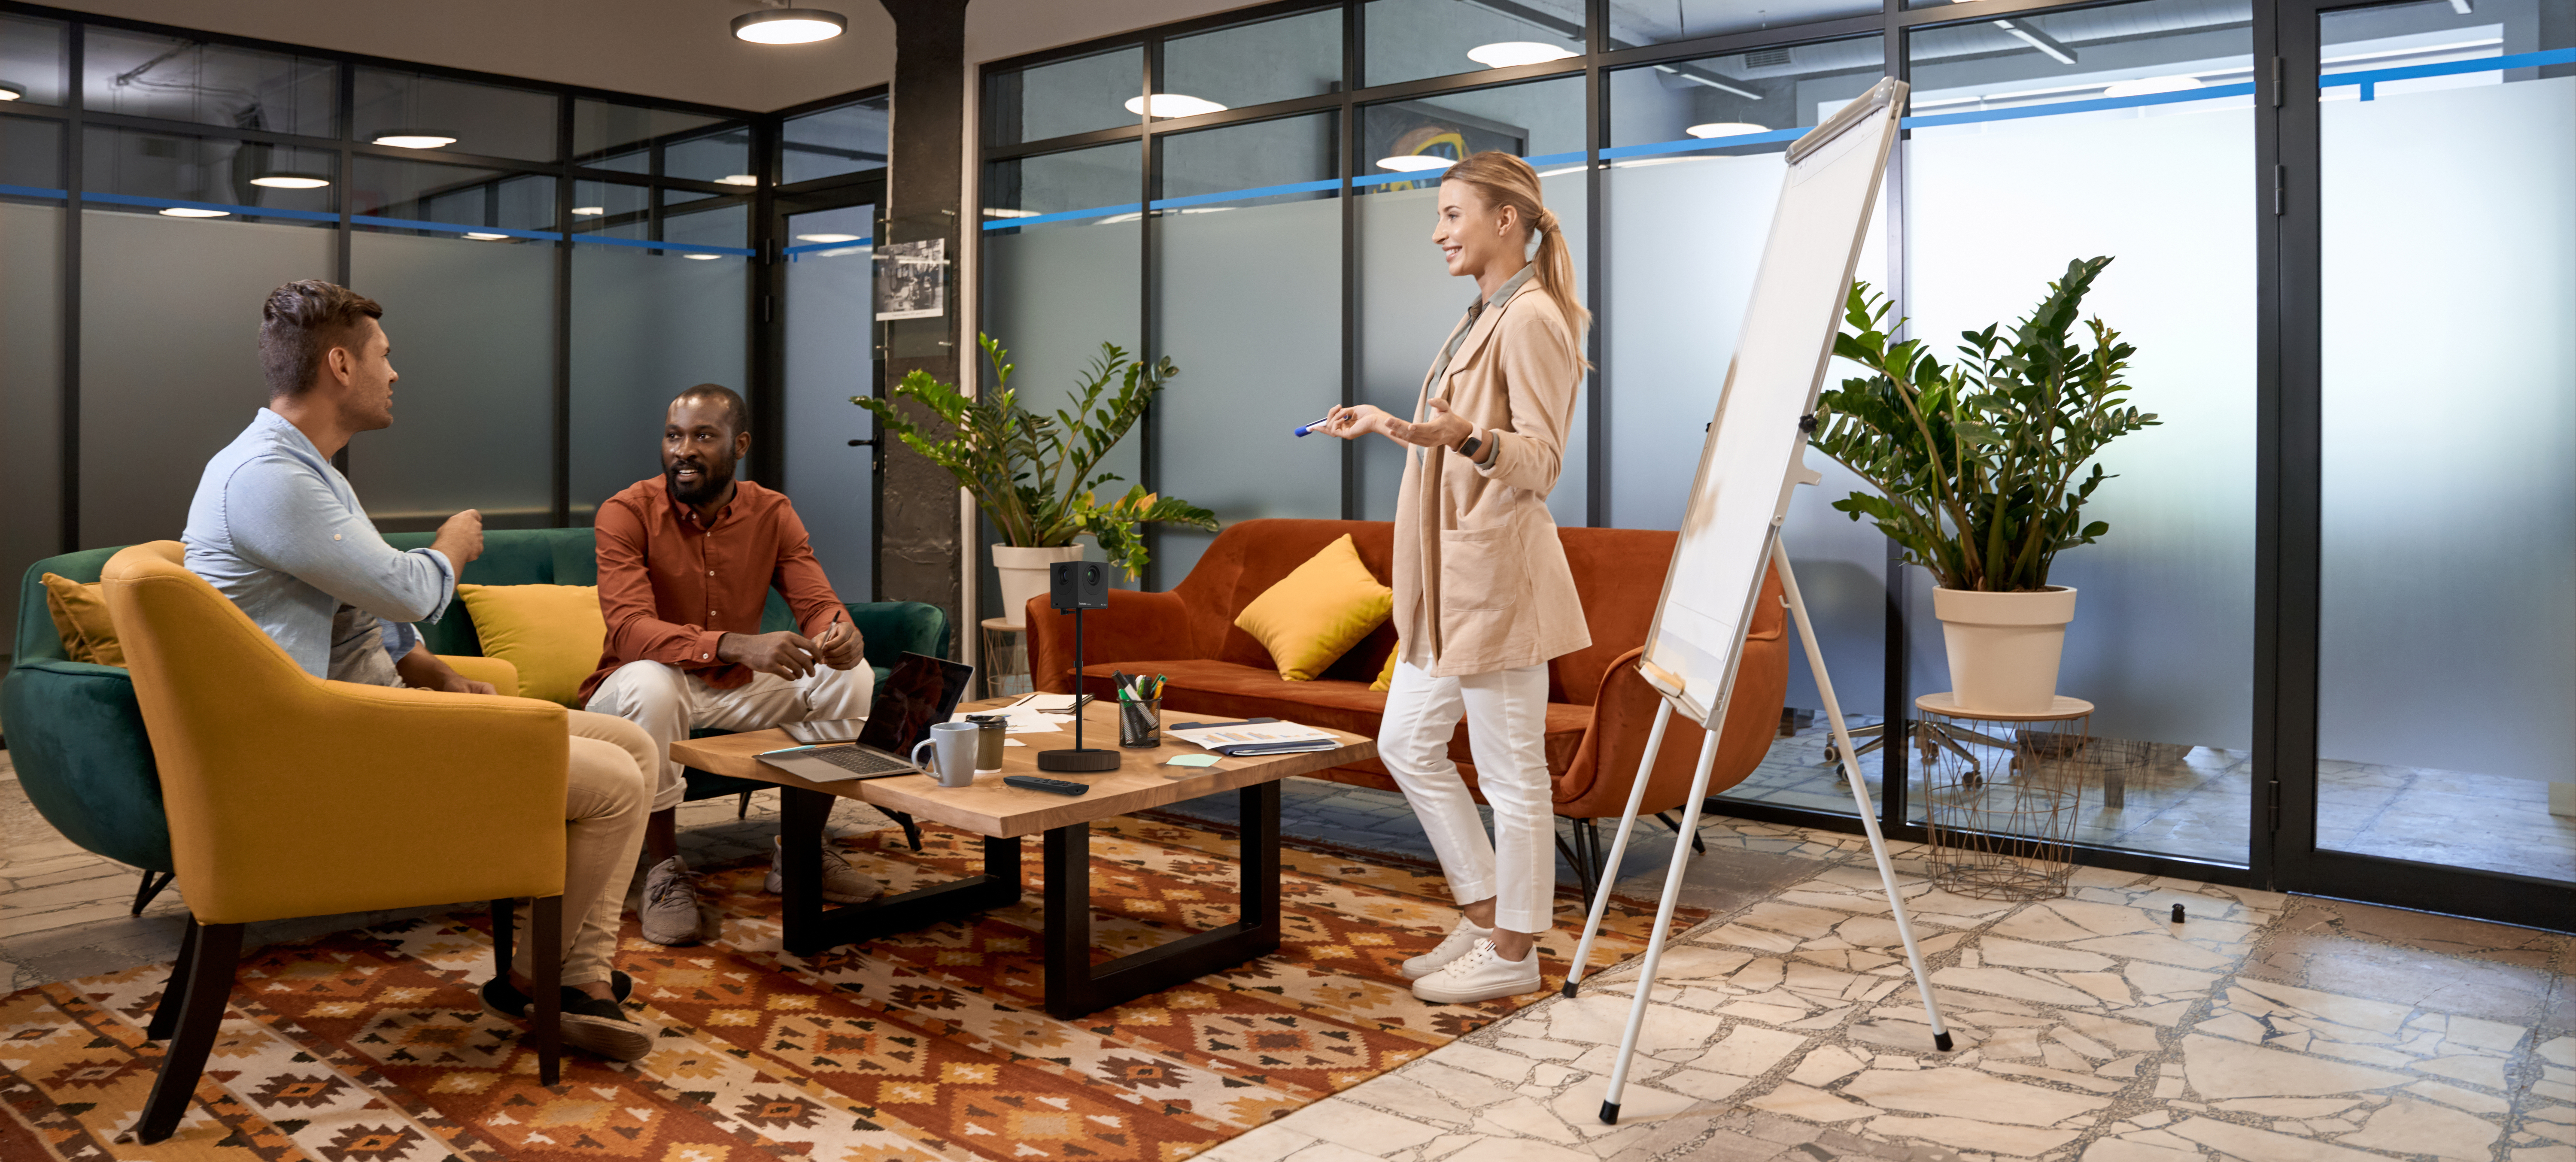 Optimise existing meeting spaces